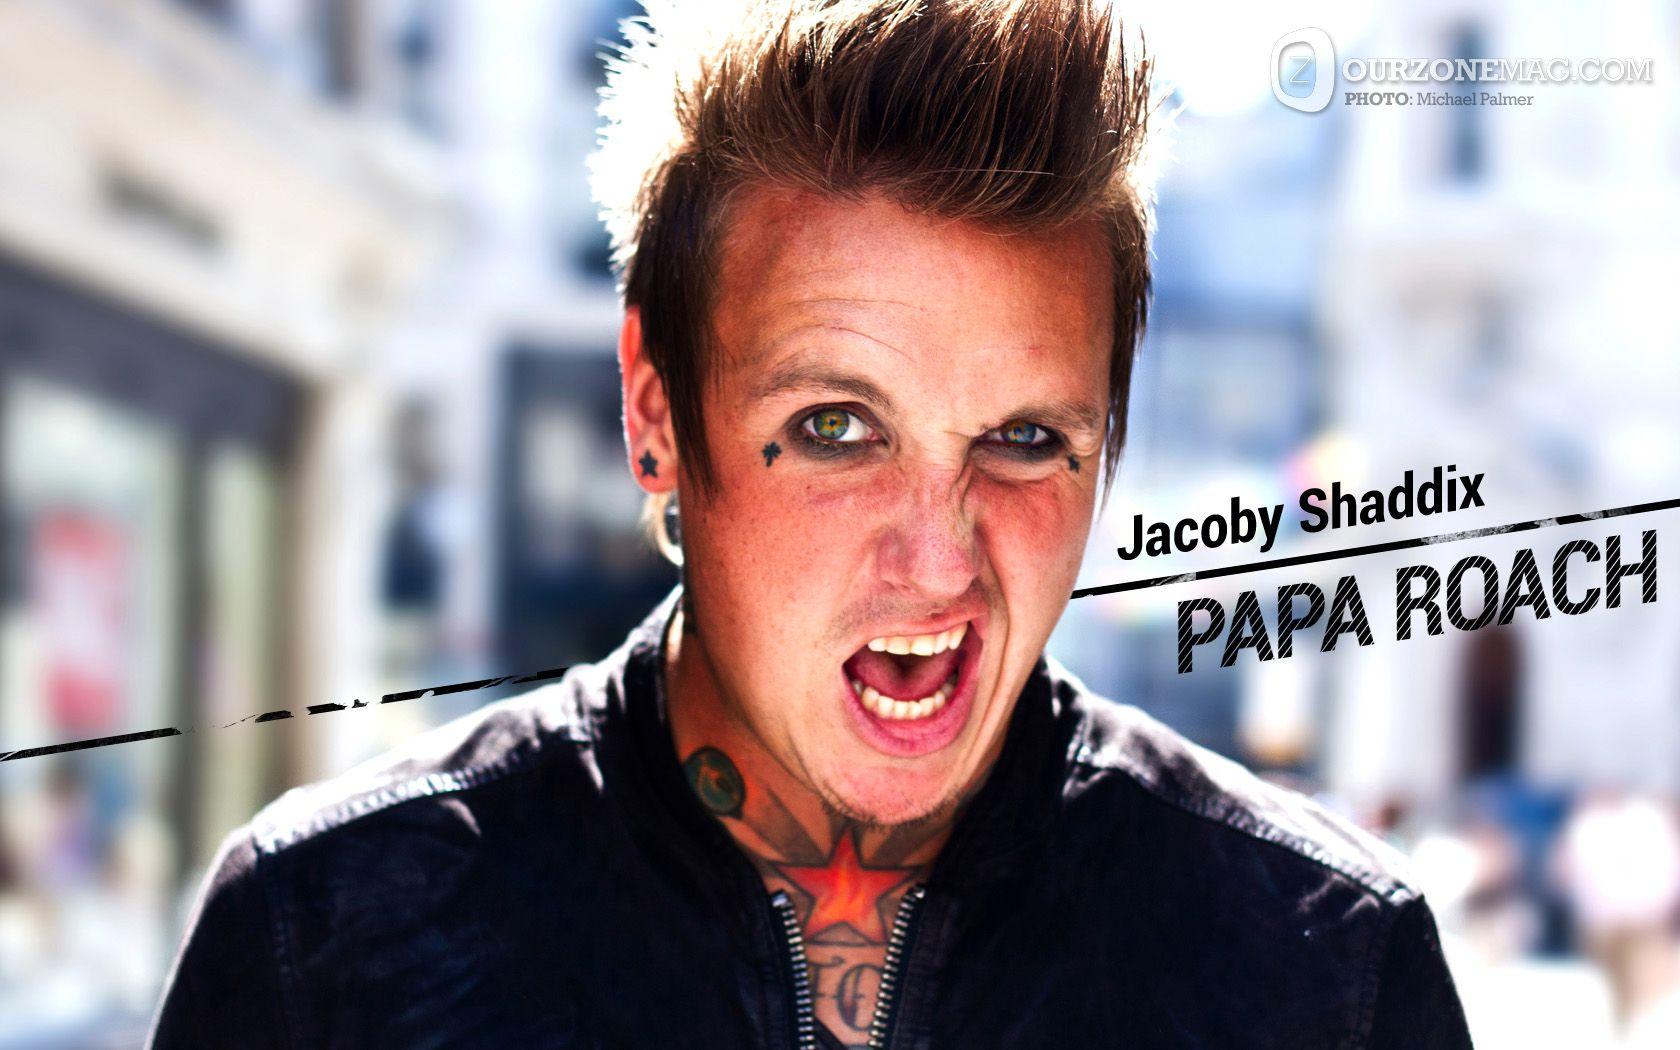 Papa Roach Wallpaper 2016